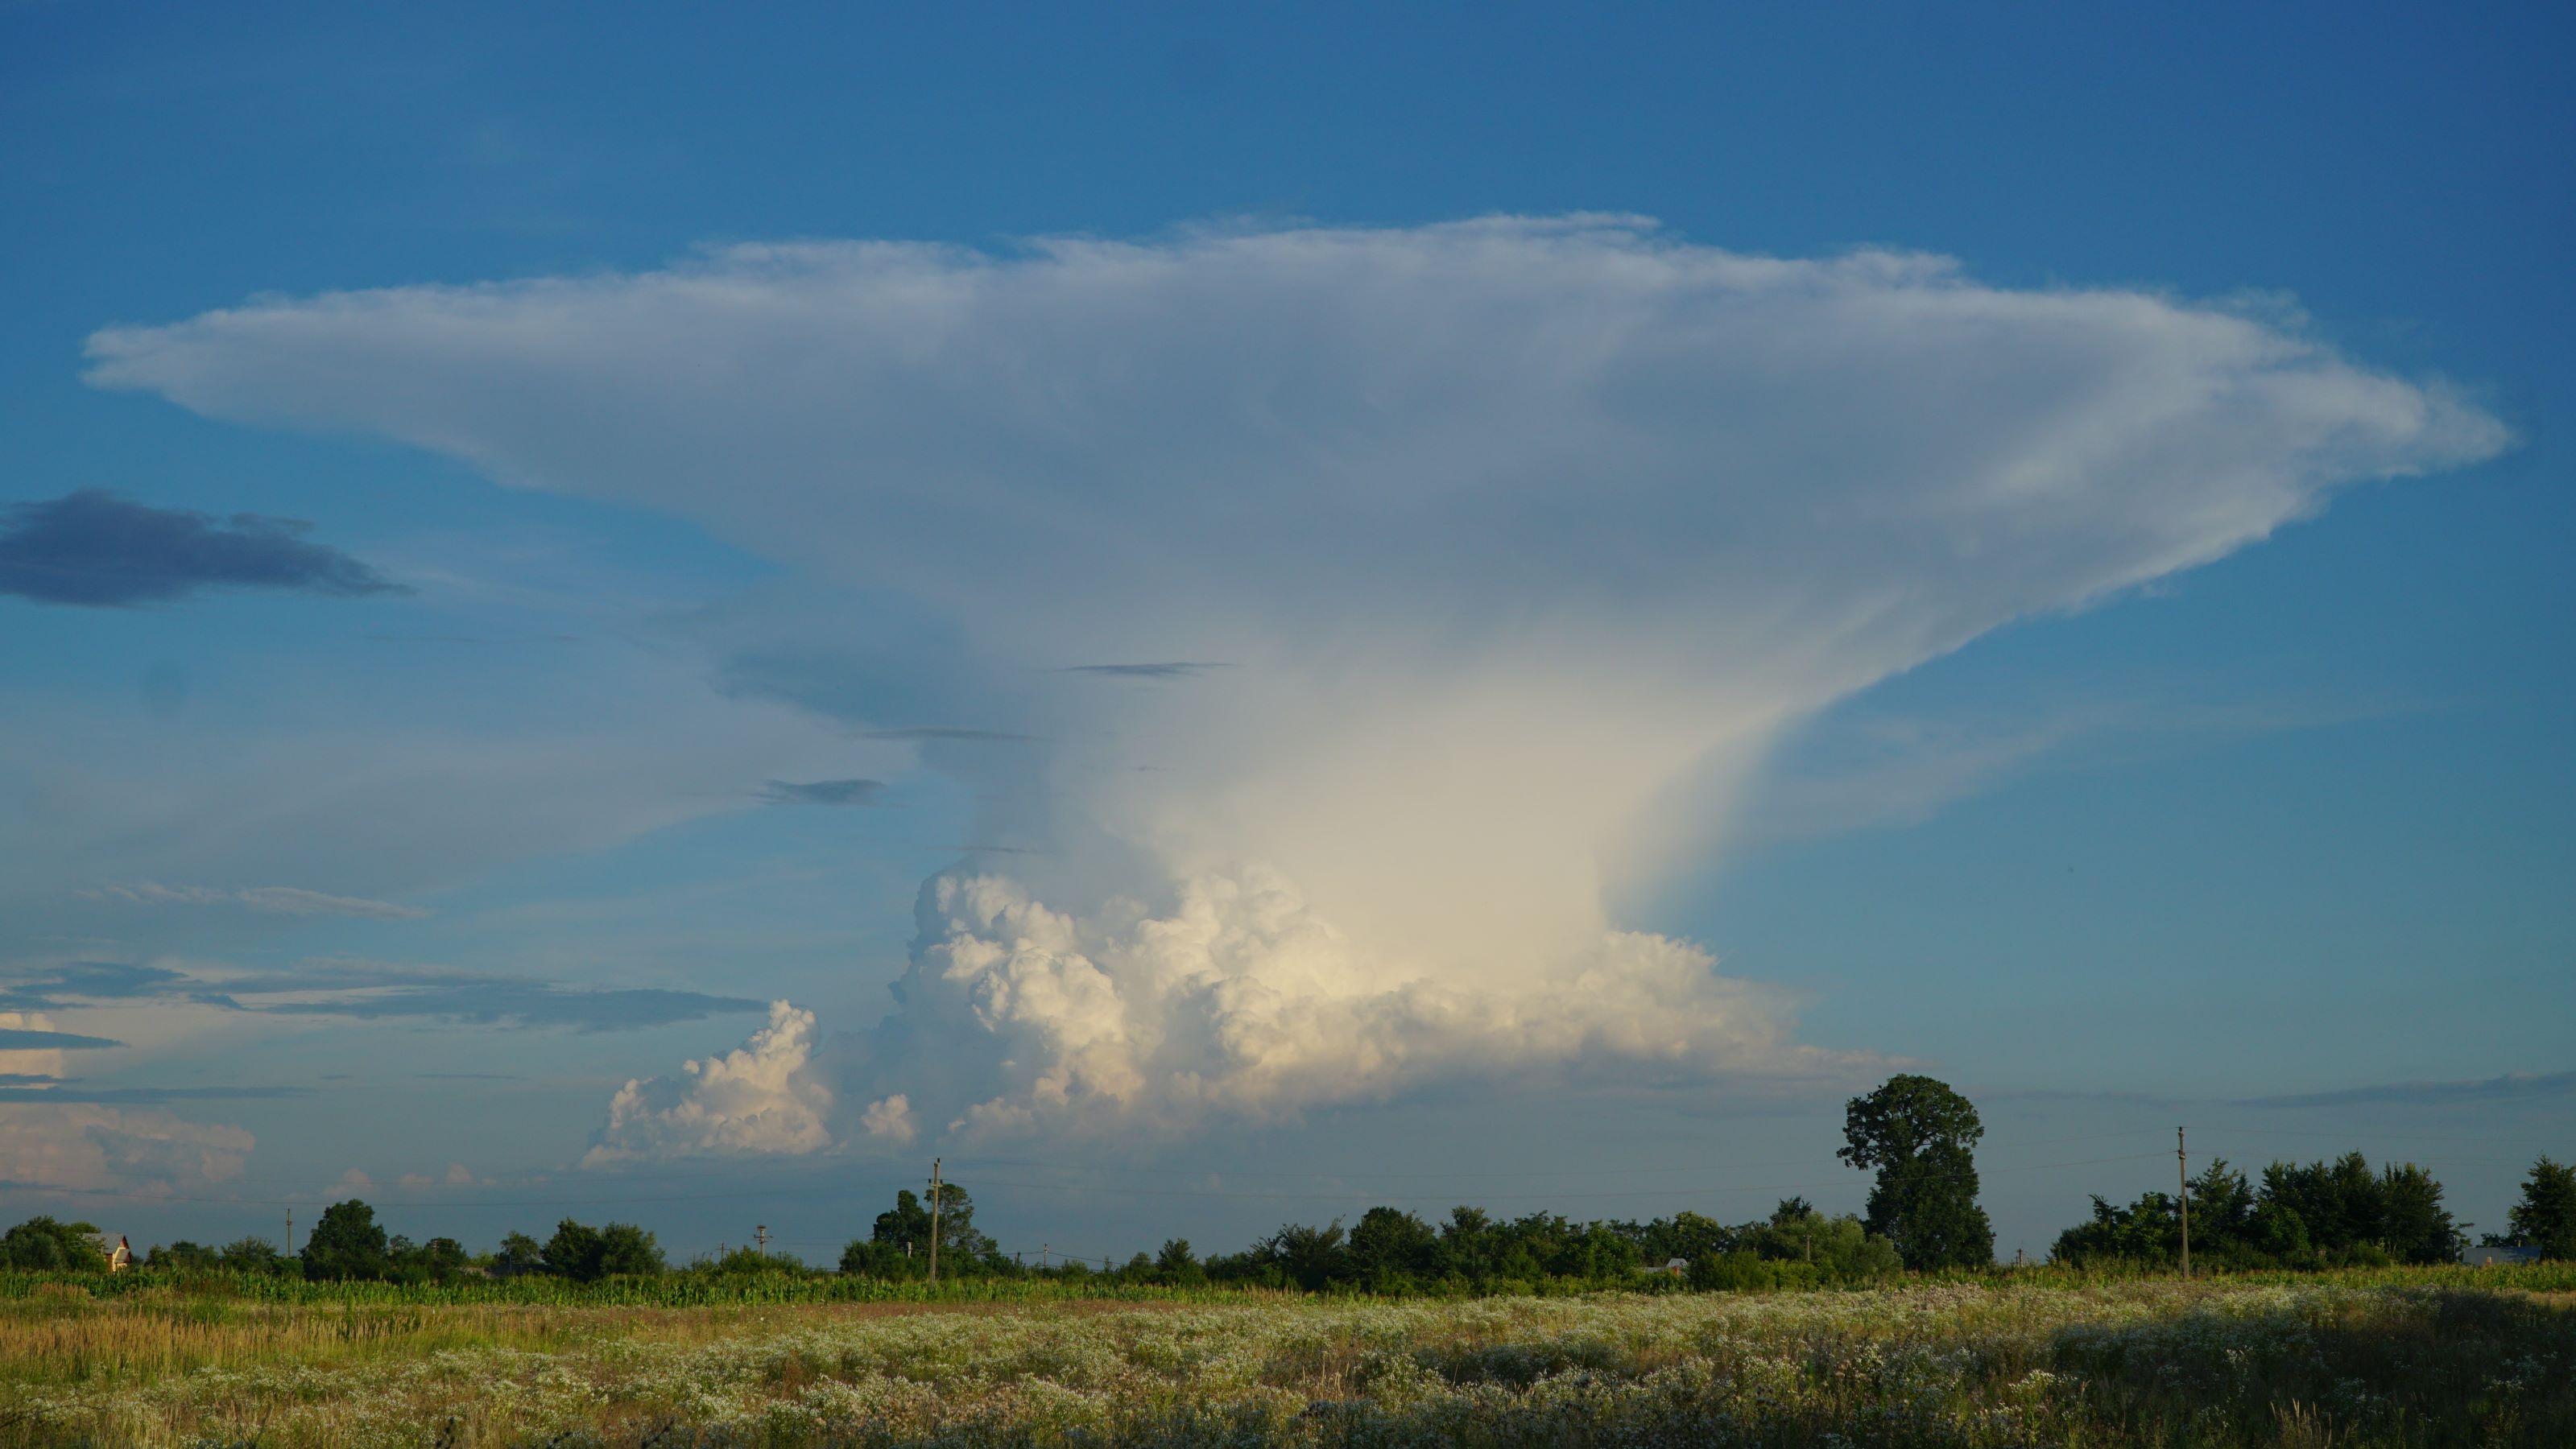 Decorative image of a cumulonimbus cloud with an anvil shaped top